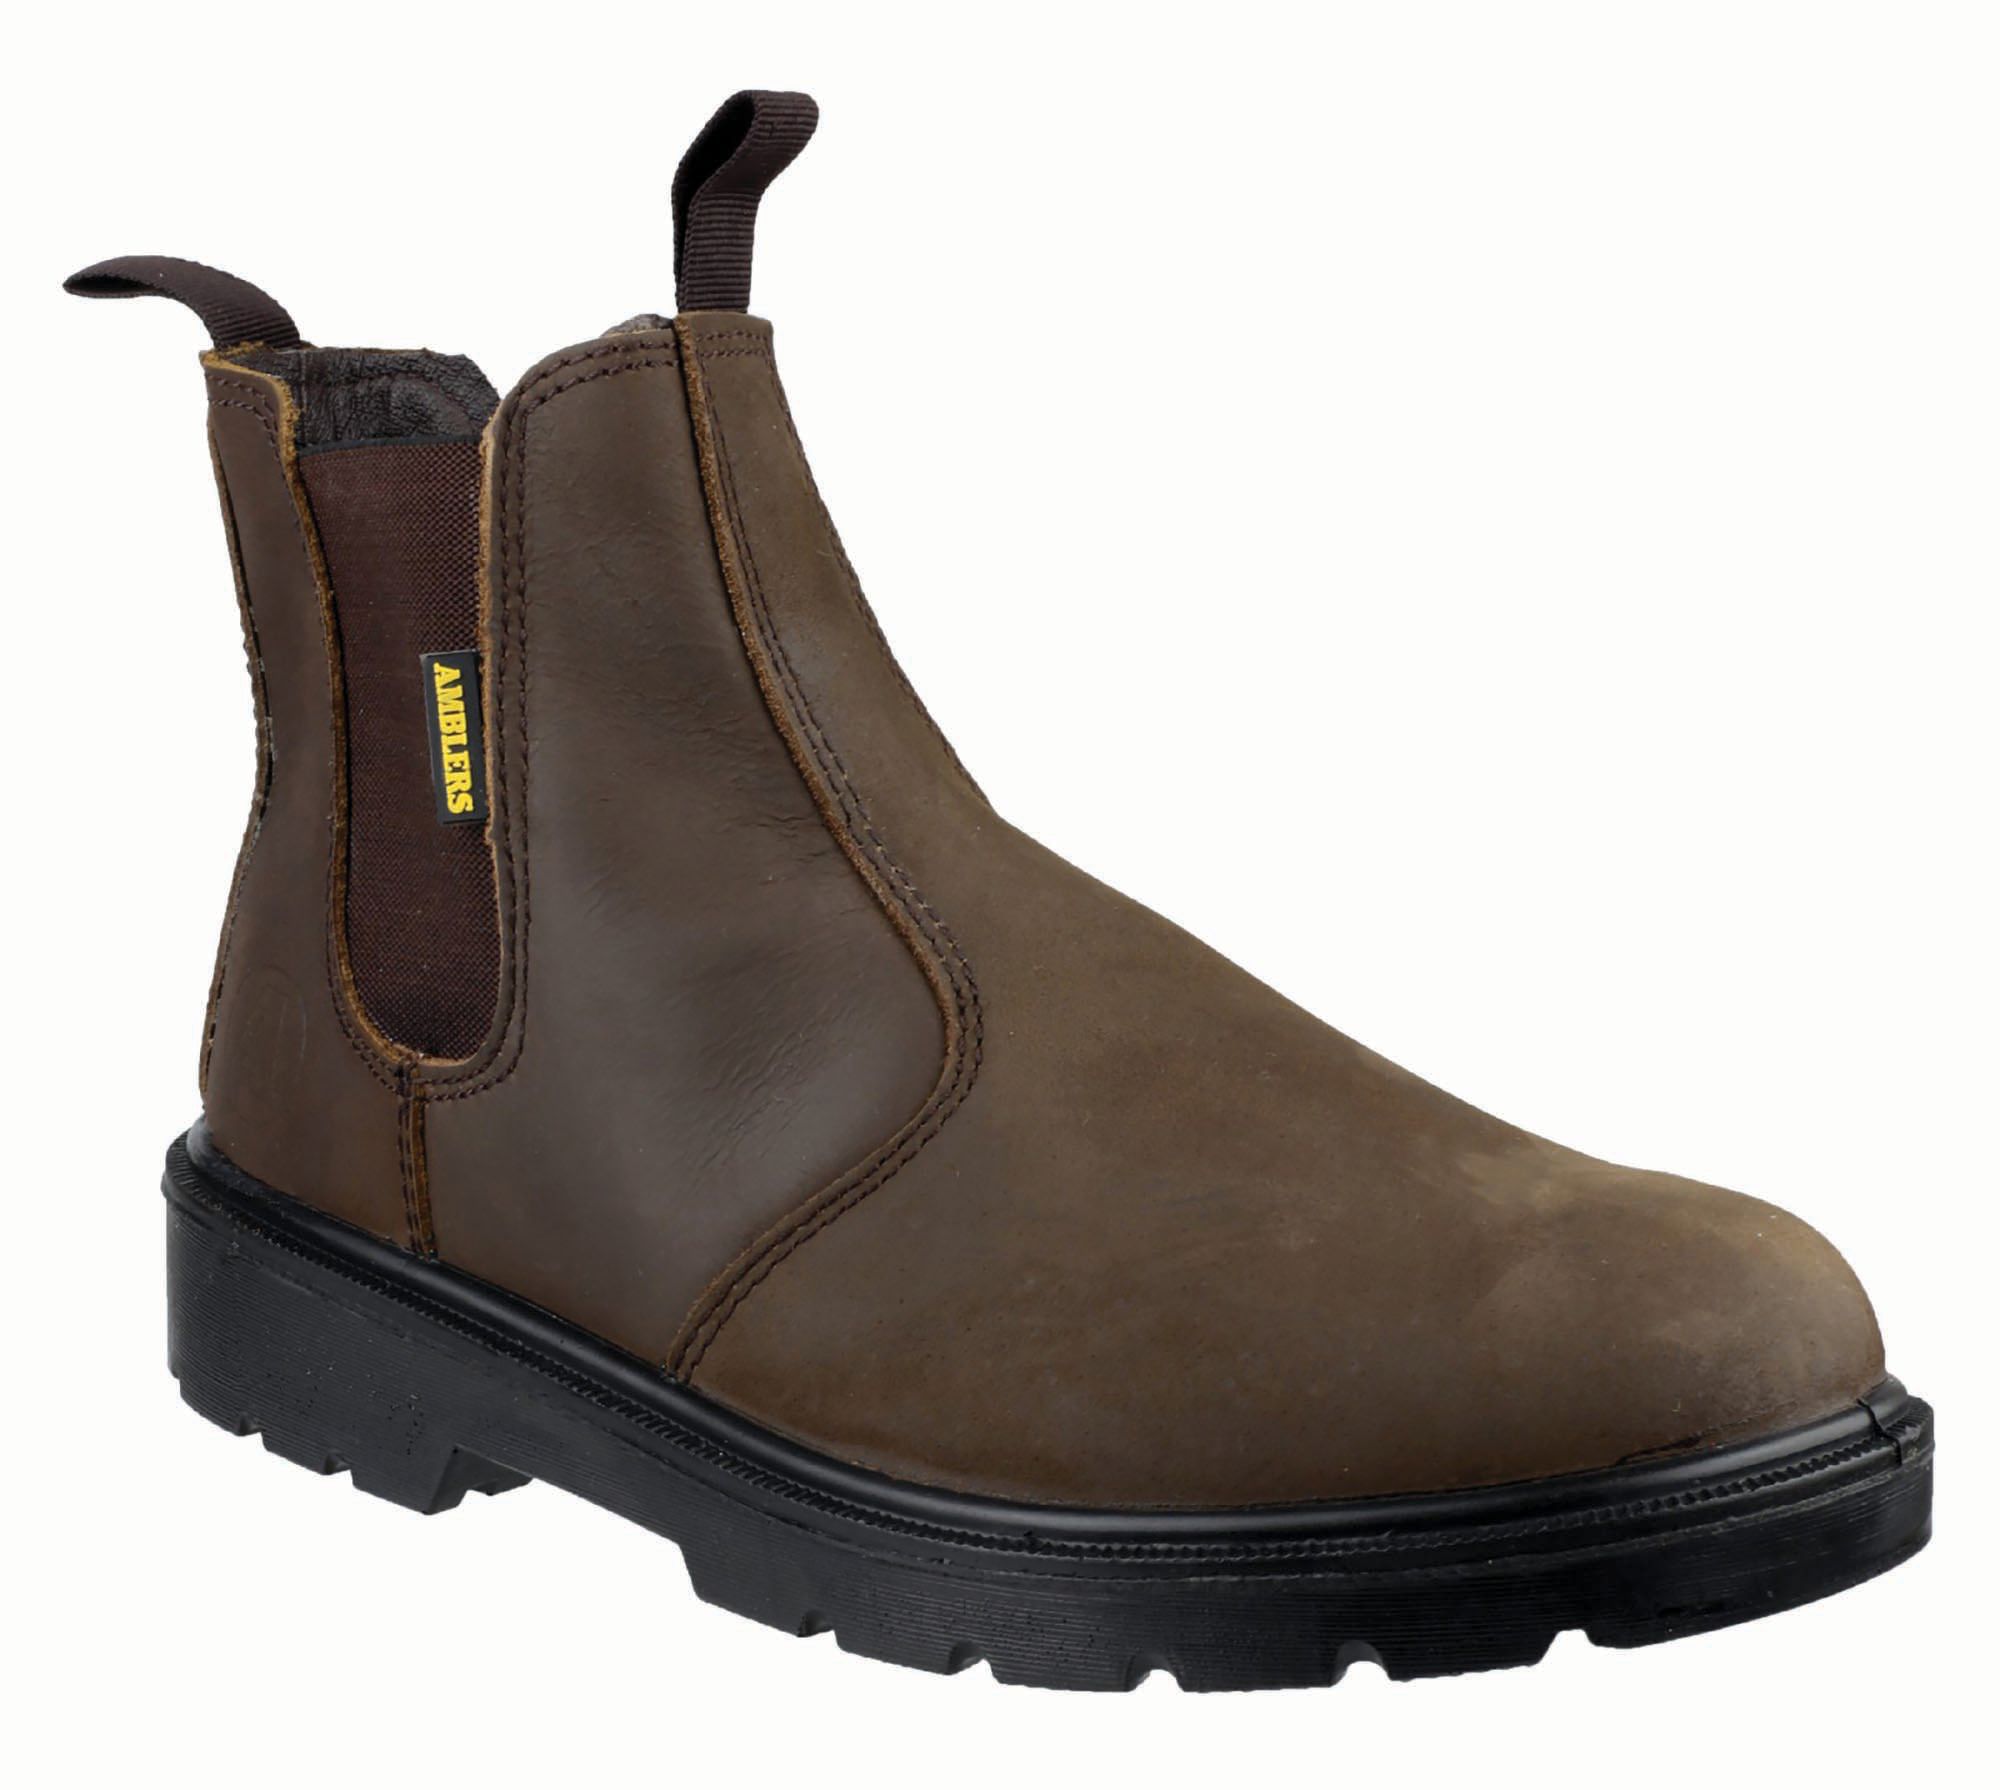 Image of Amblers Safety FS128 Dealer Safety Boot - Brown Size 3